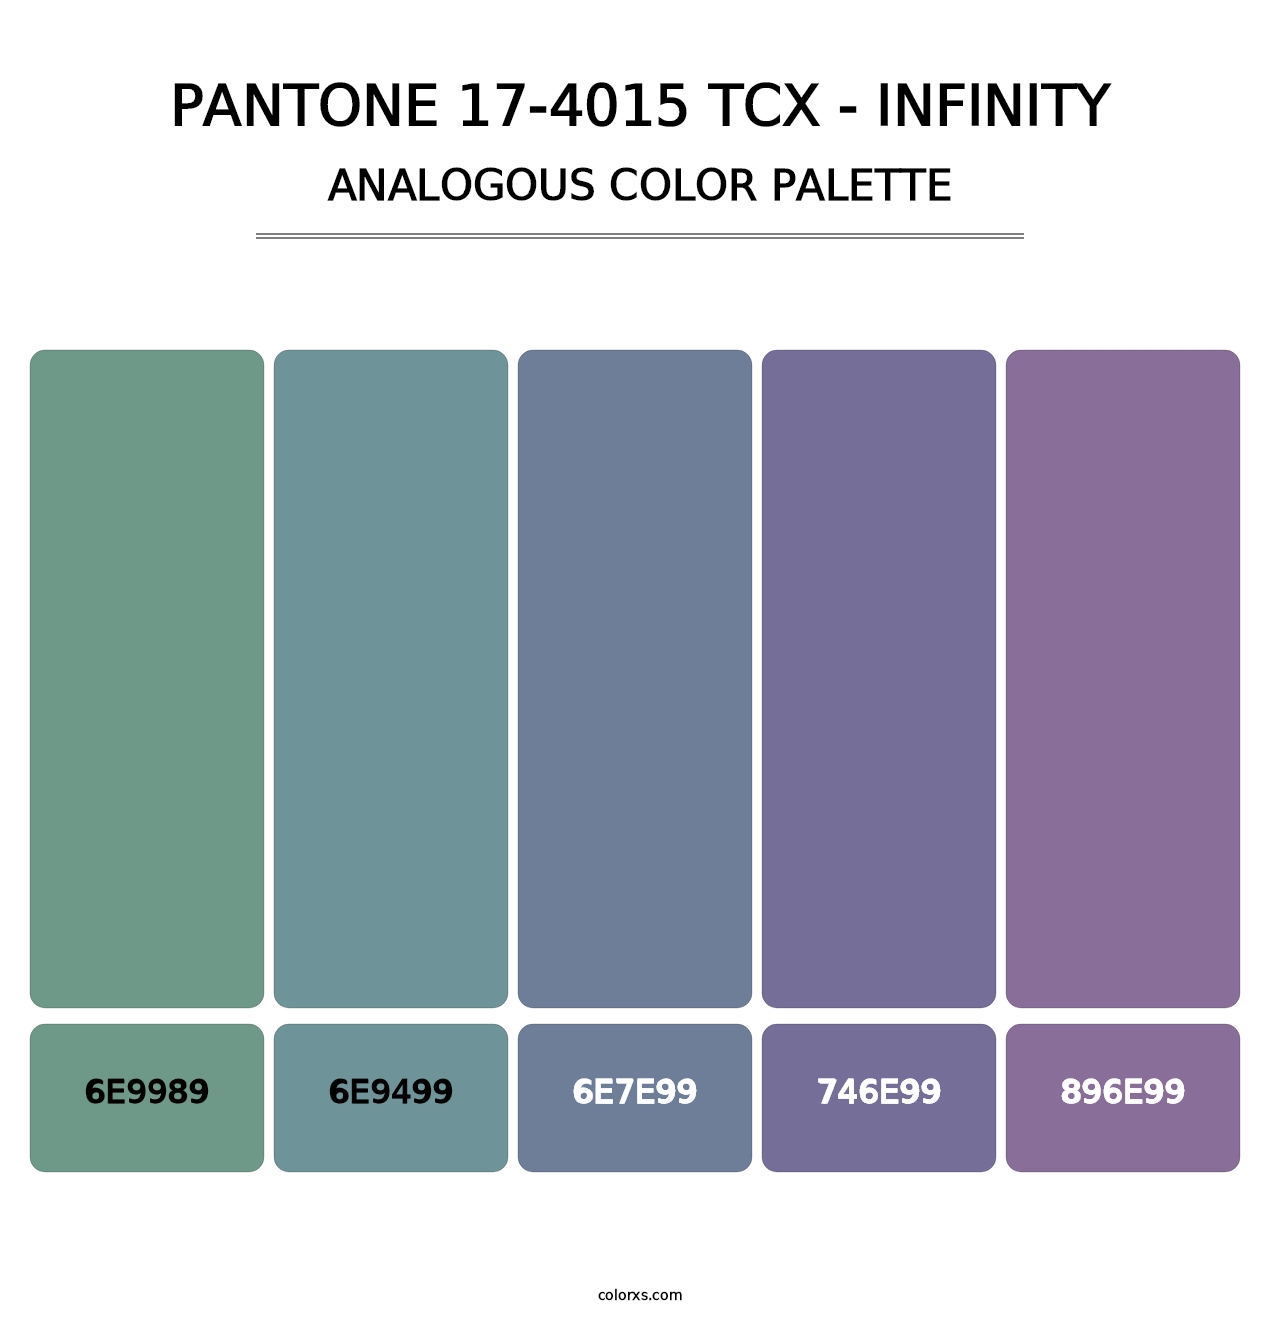 PANTONE 17-4015 TCX - Infinity - Analogous Color Palette